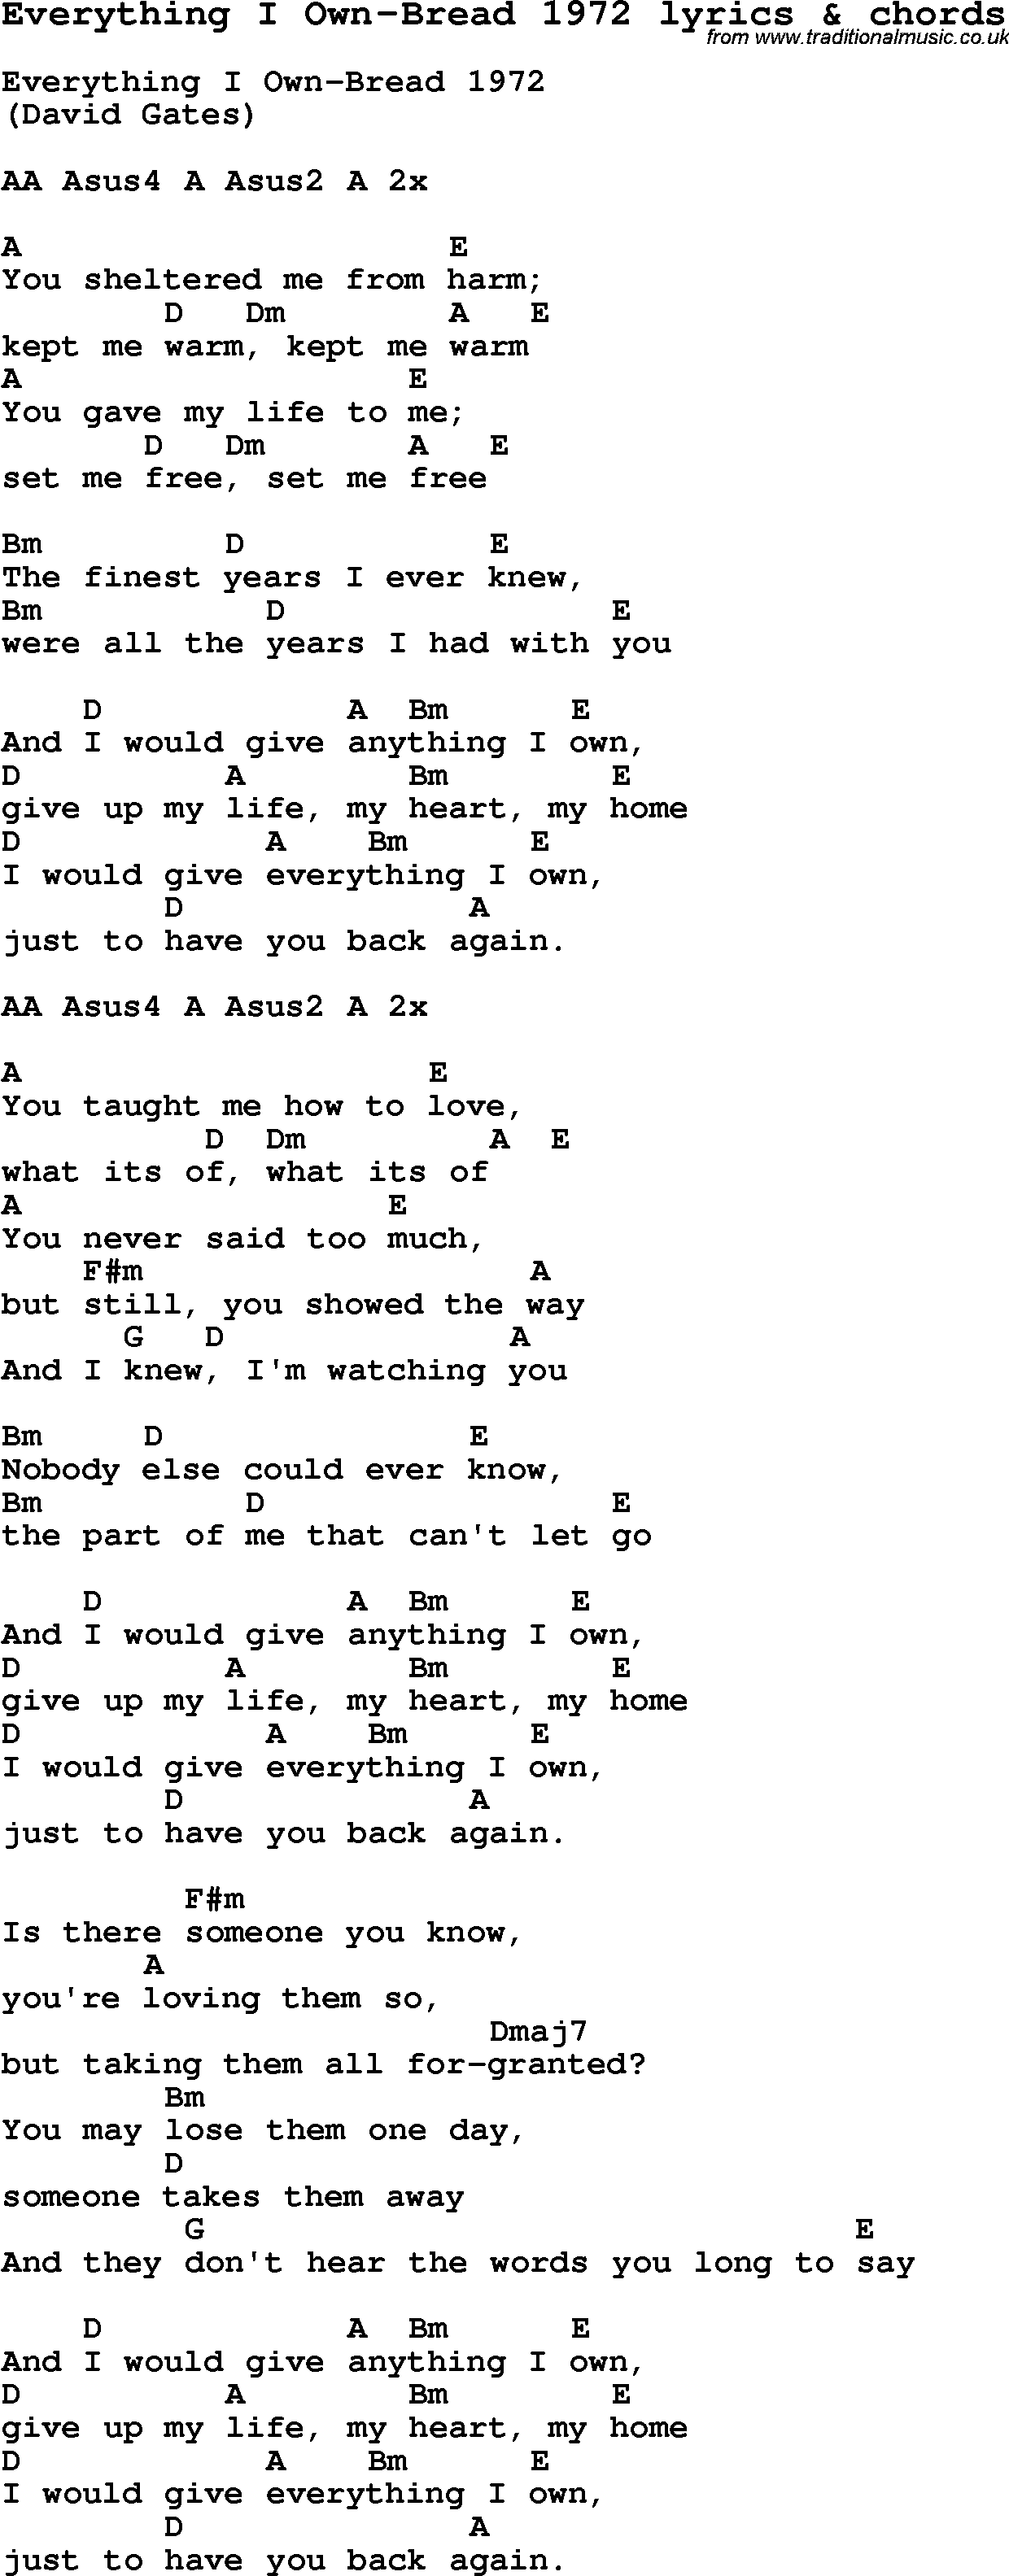 Love Song Lyrics for: Everything I Own-Bread 1972 with chords for Ukulele, Guitar Banjo etc.